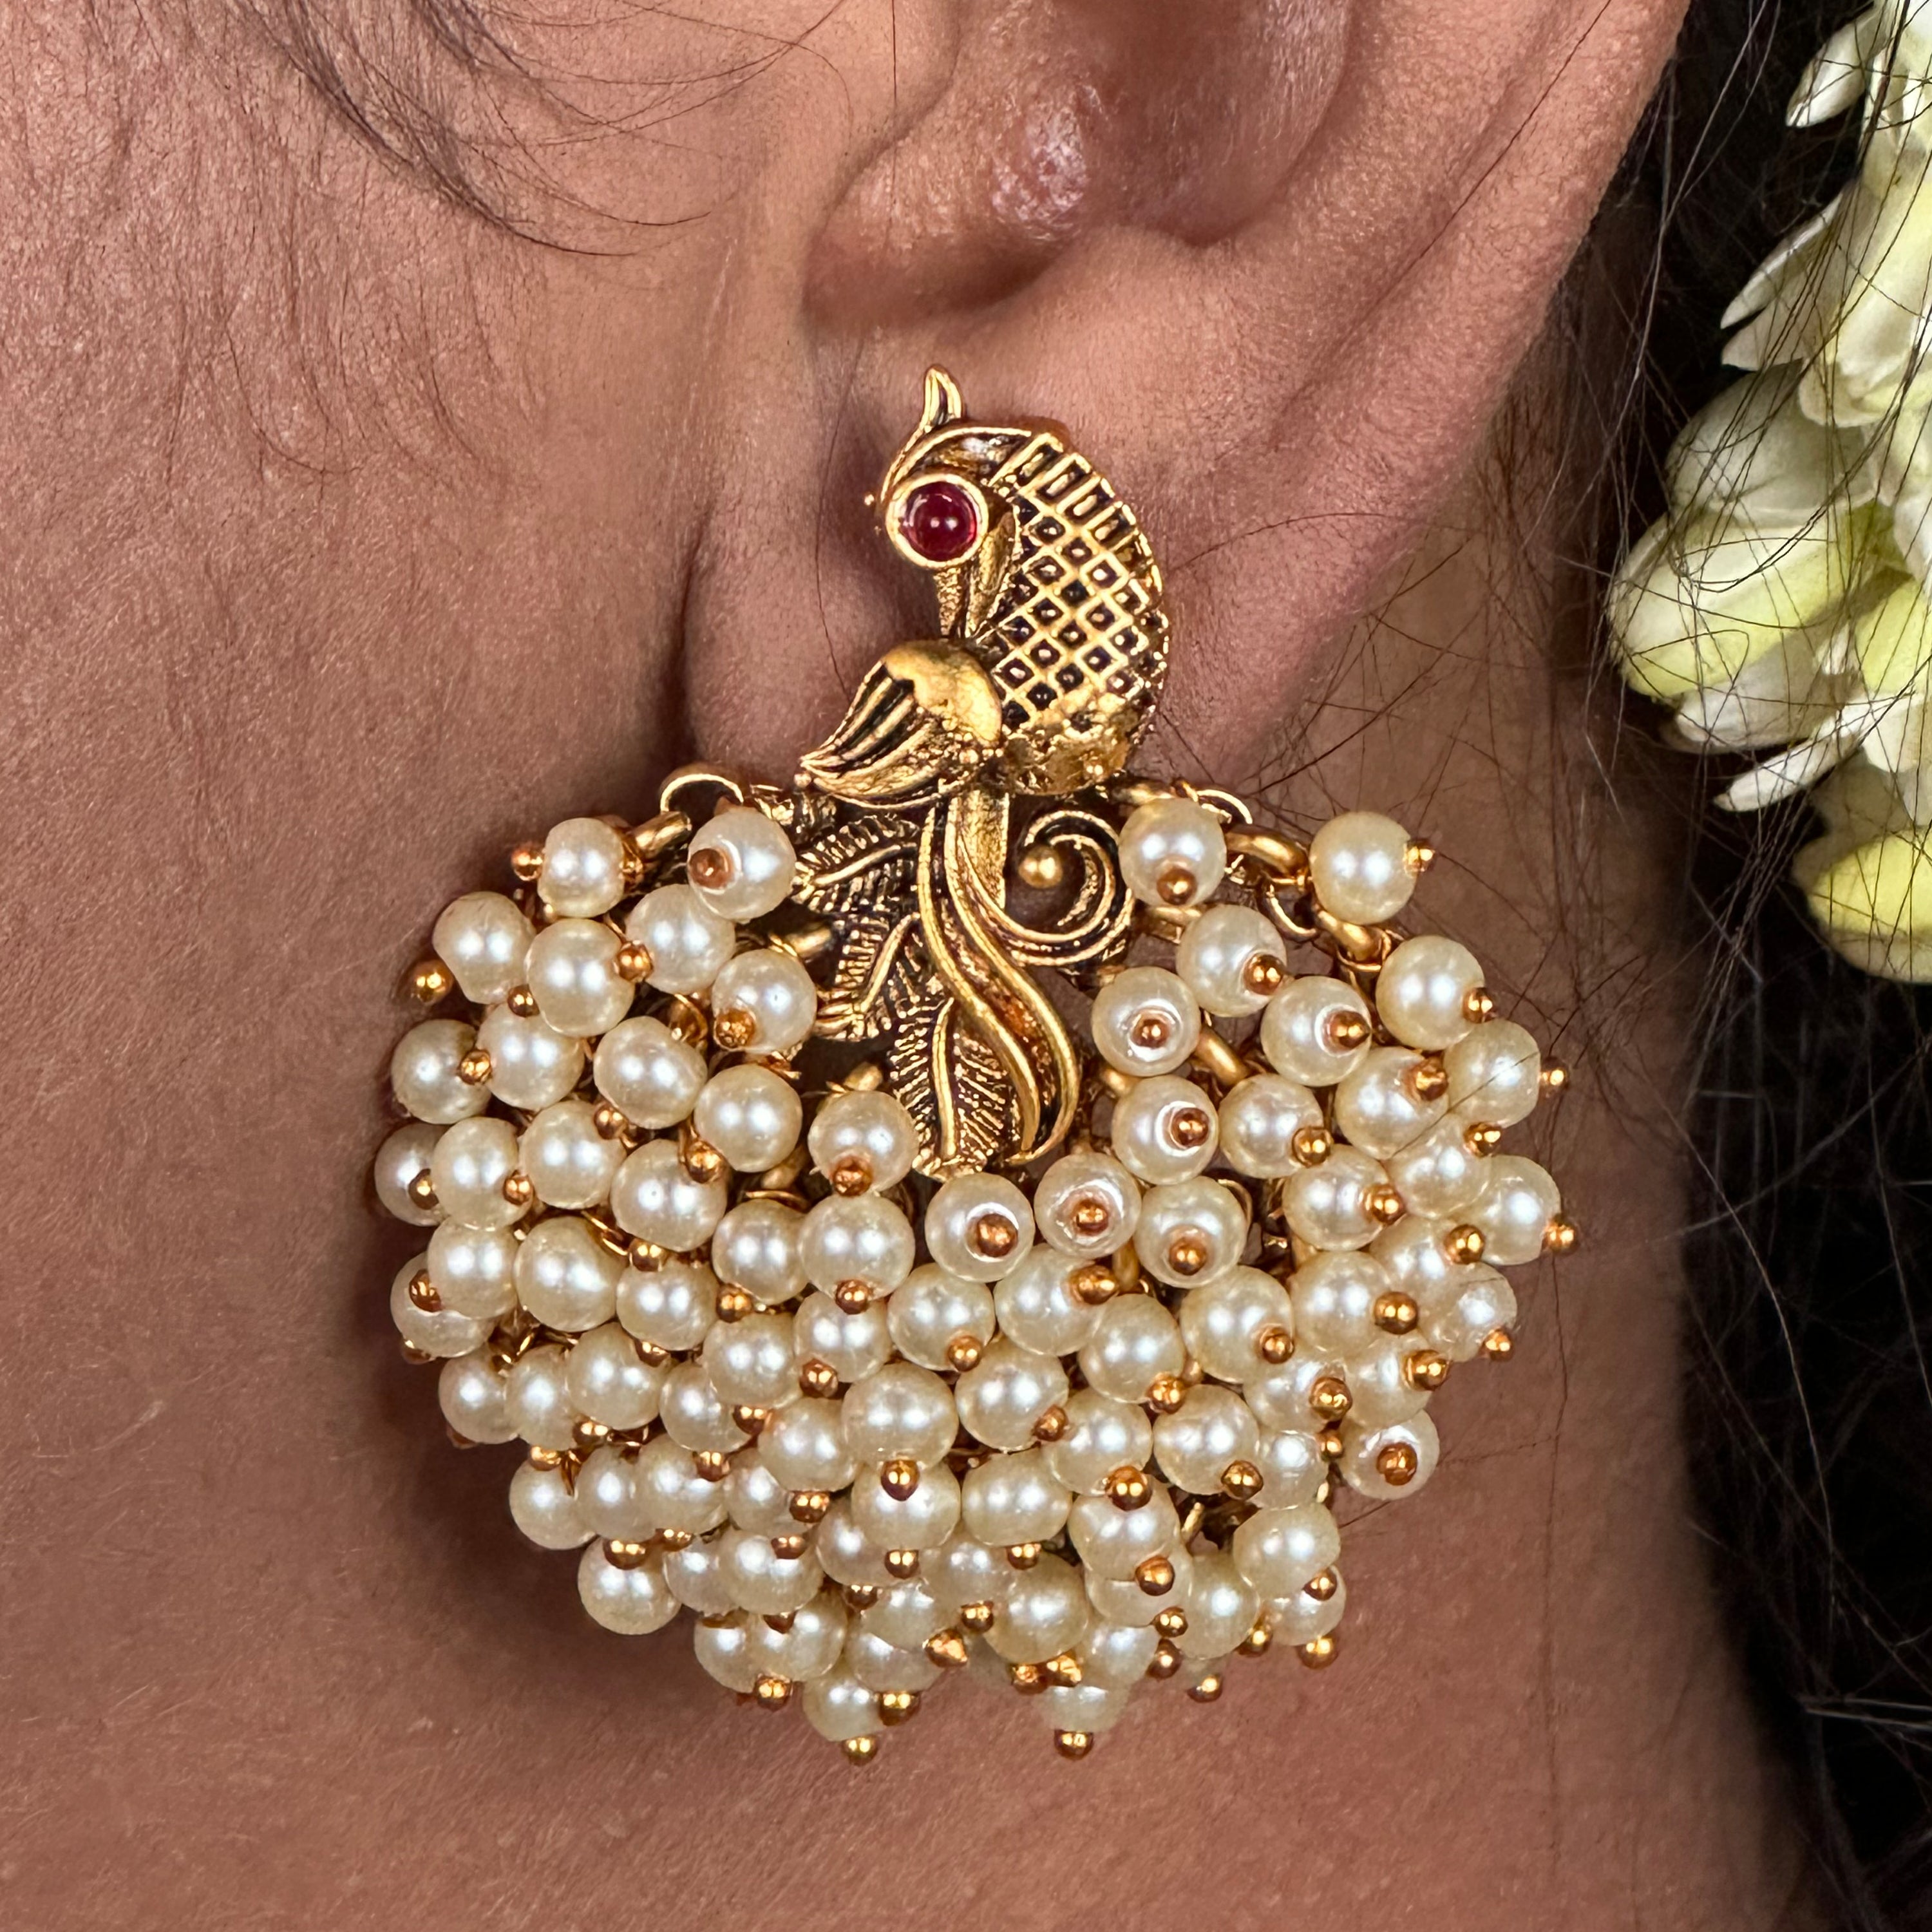 Buy Freshwater Pearl Studs Earrings Online in India - The Miraya Store